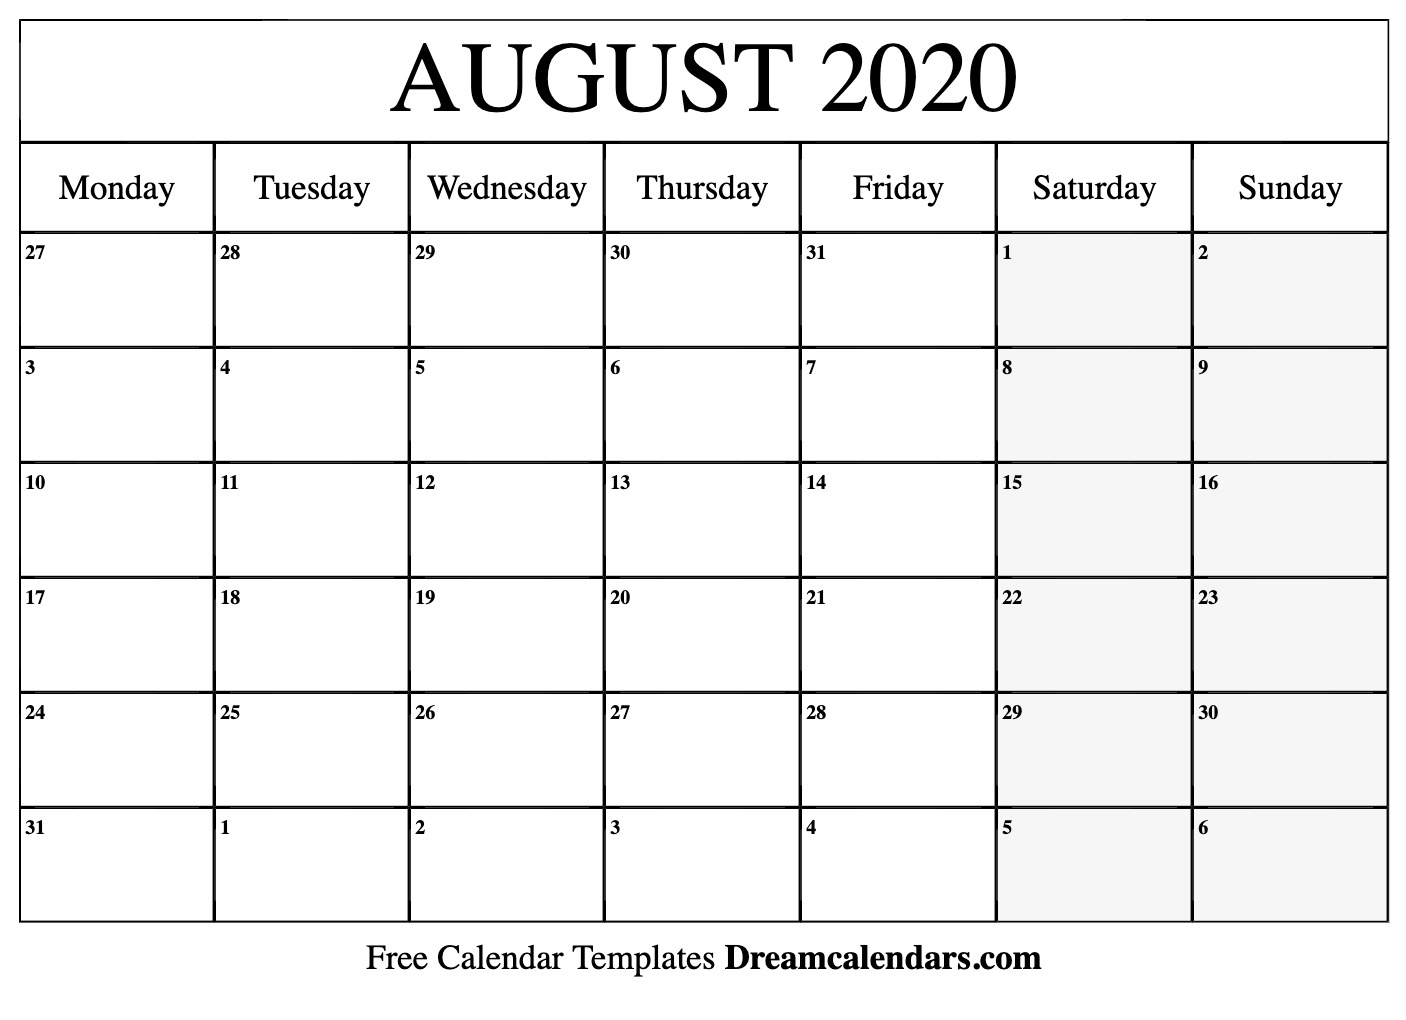 Free August 2020 Printable Calendar Dream Calendars 1406x1020